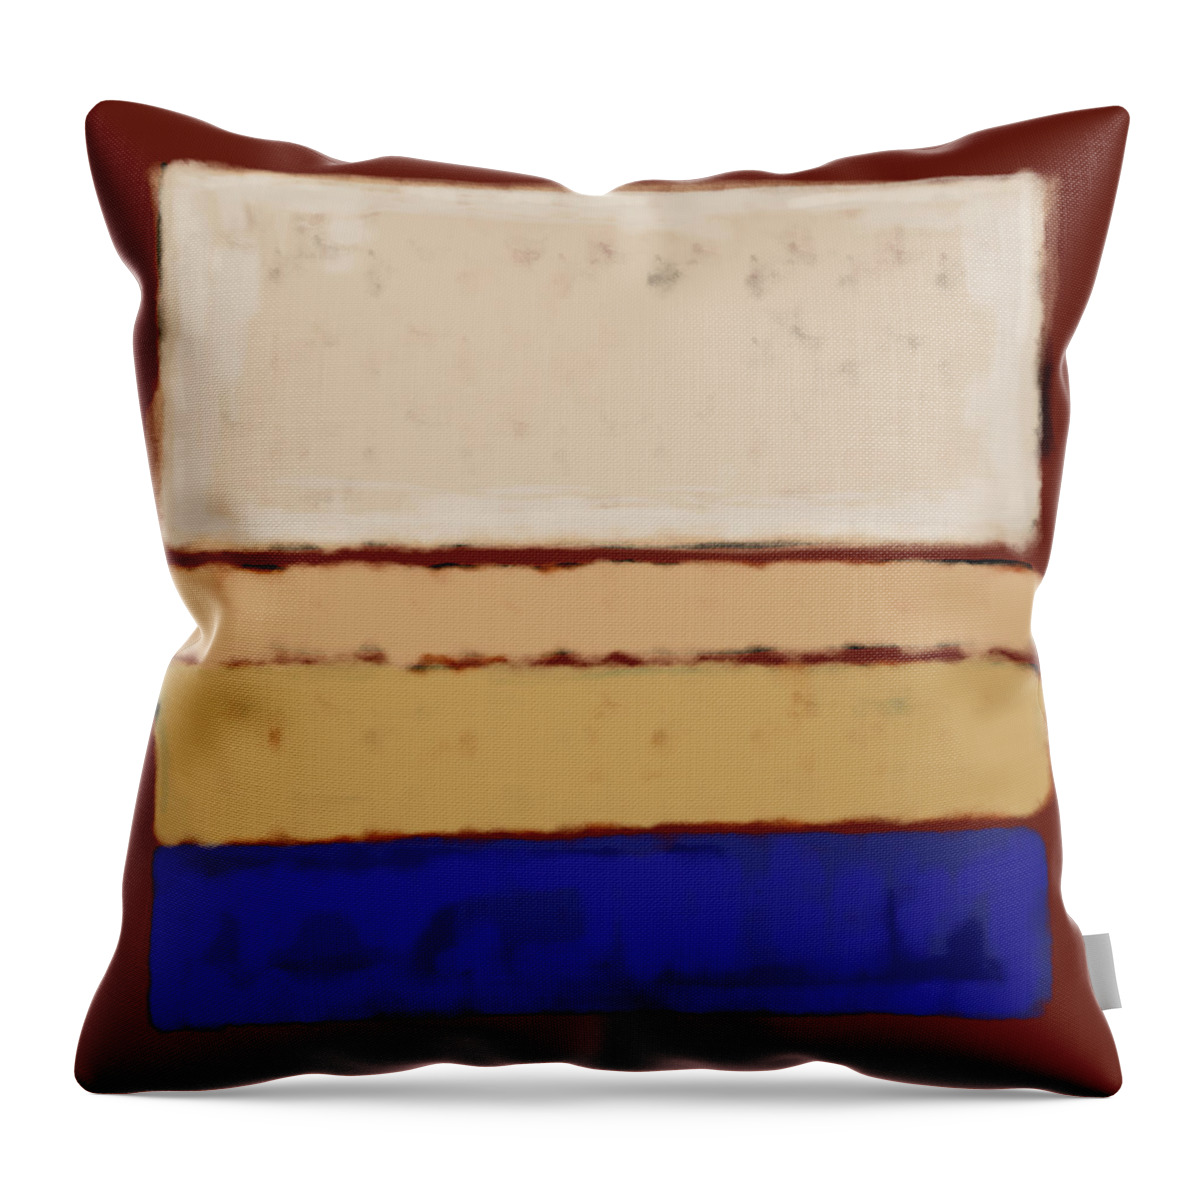 Orbital Throw Pillow featuring the digital art Beach Composition by Creative Spirit